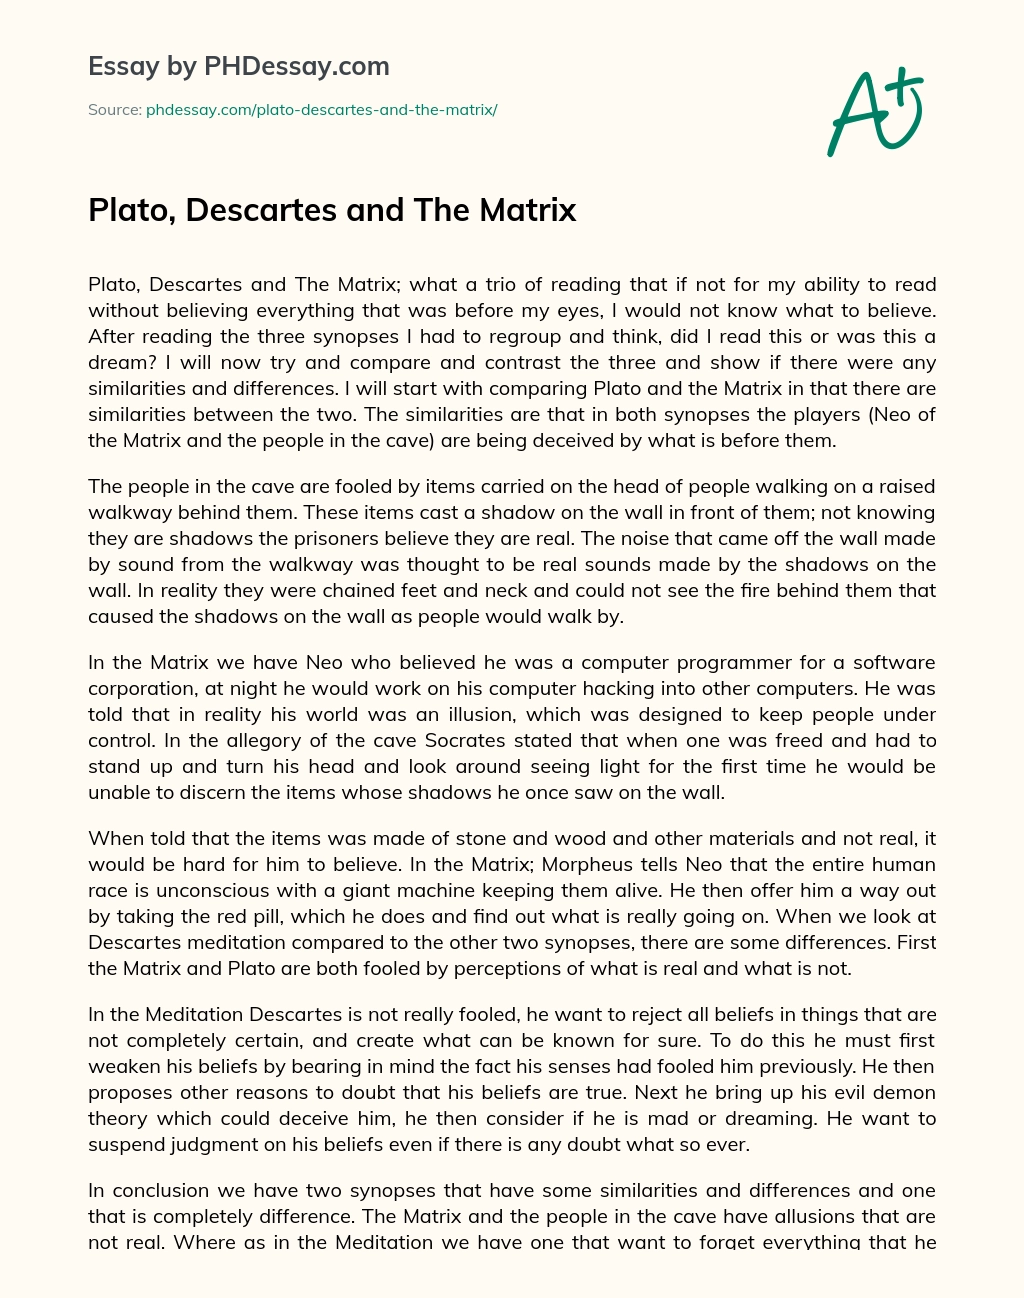 Plato, Descartes and The Matrix essay